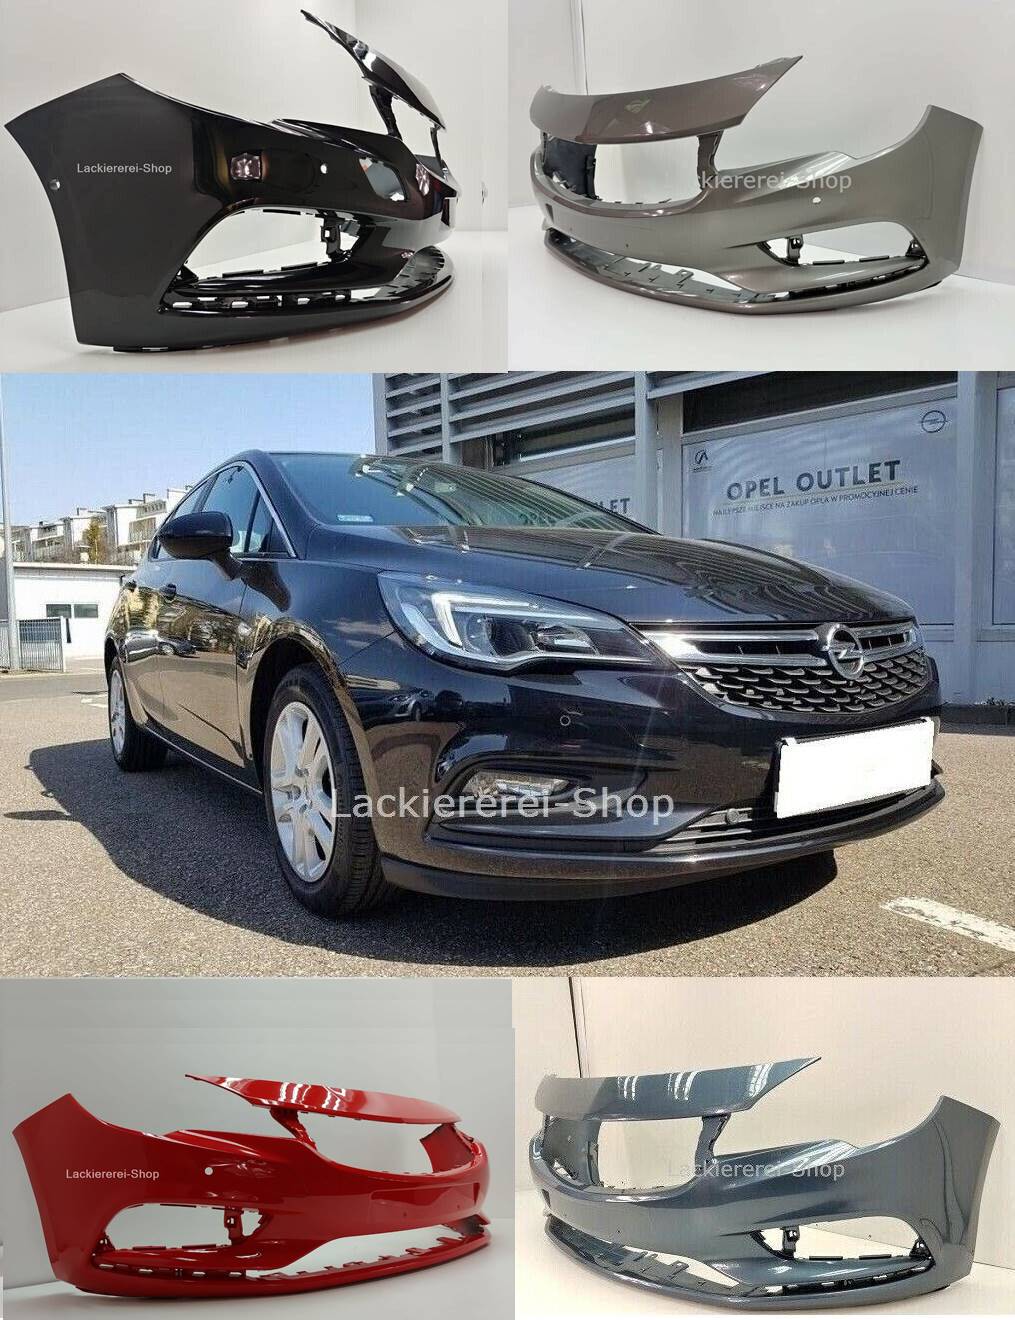 https://lackiererei-shop.de/wp-content/uploads/2019/01/Opel-Astra-K-2015-2019-STOssSTANGE-VORNE-4.jpg